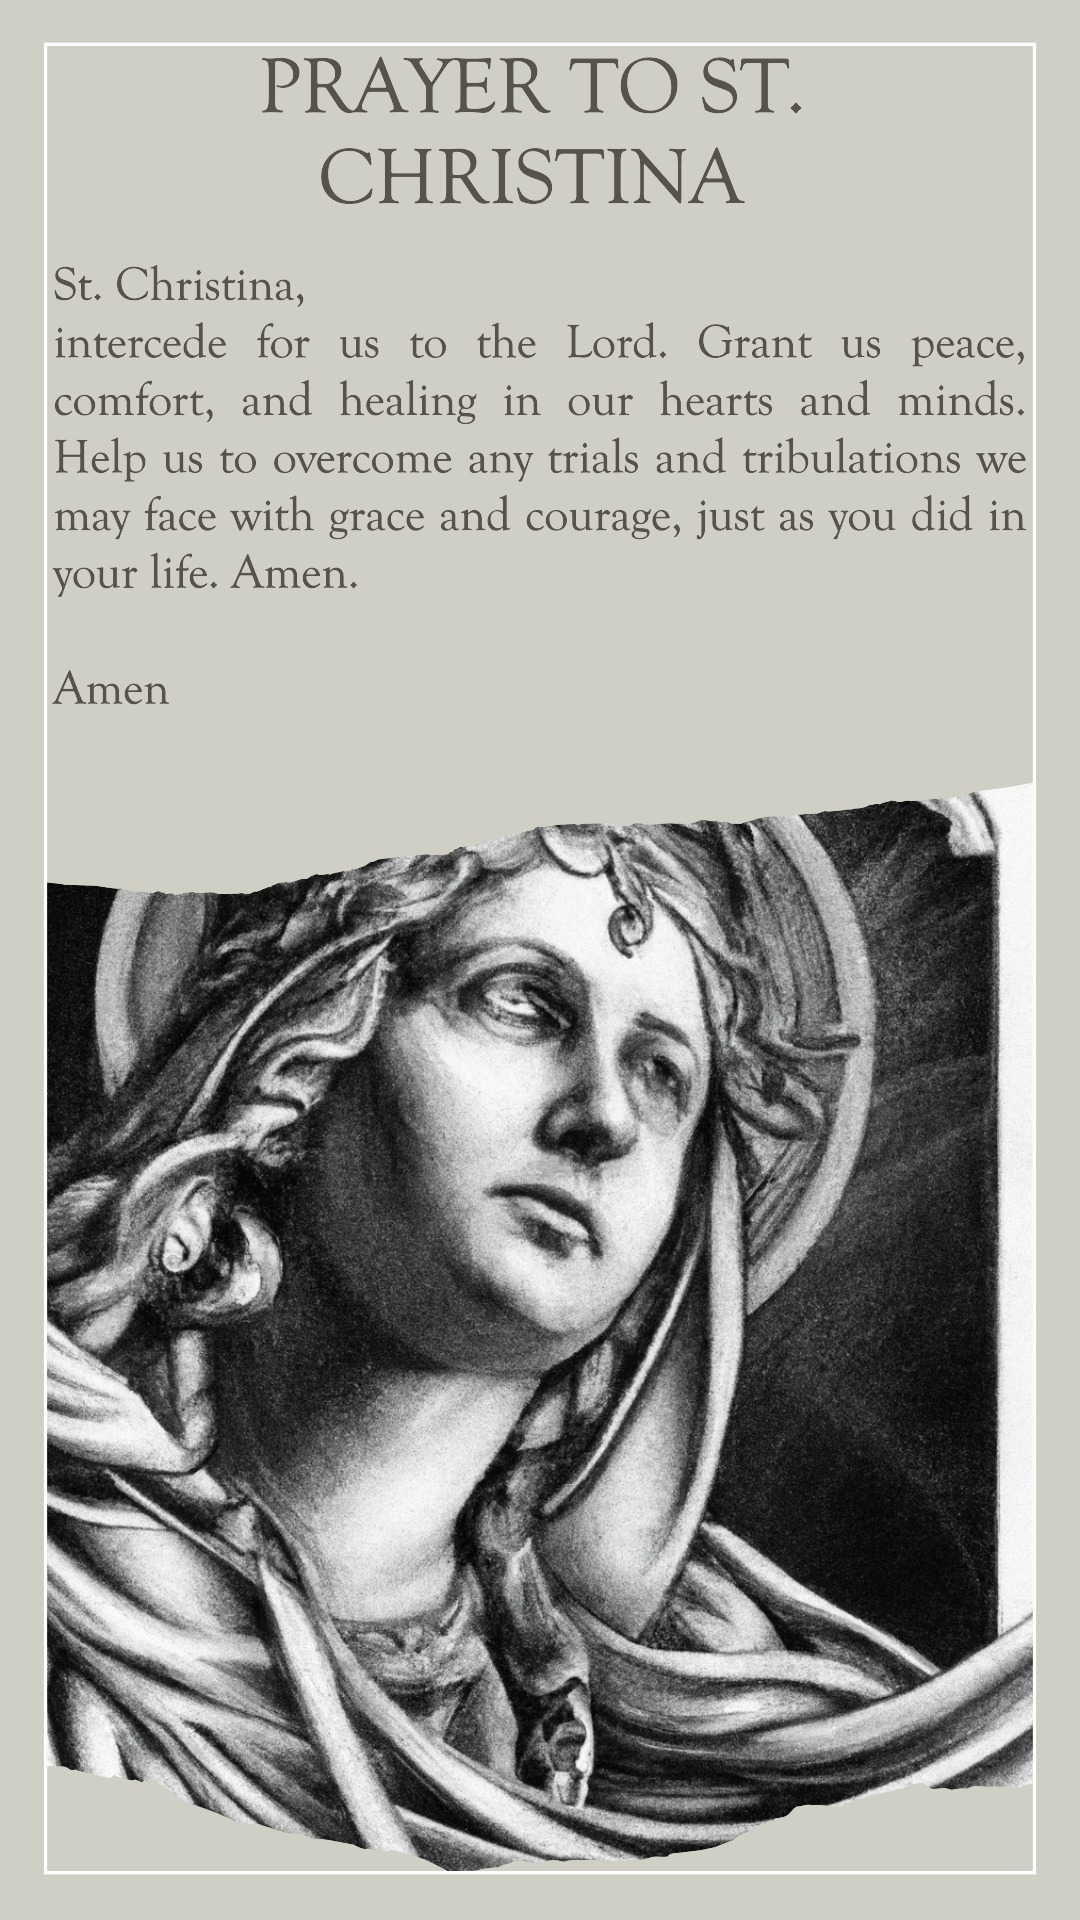 St. Christina the Astonishing Prayer to